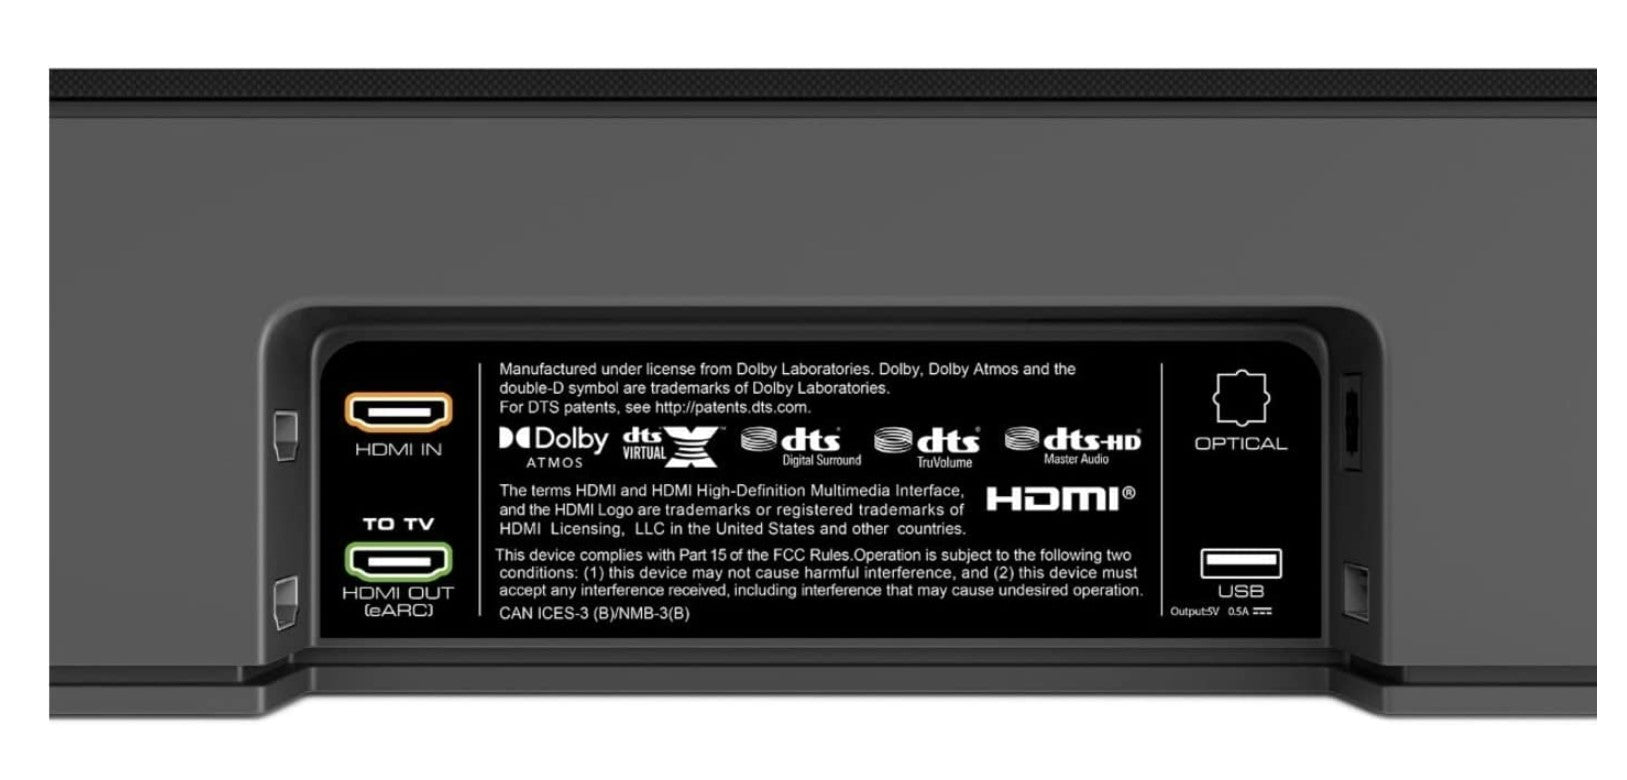 Vizio SR-M512a-H6B-RB 40" M-Series 5.1.2 Dolby Atmos Sound Bar System - Seller Refurbished